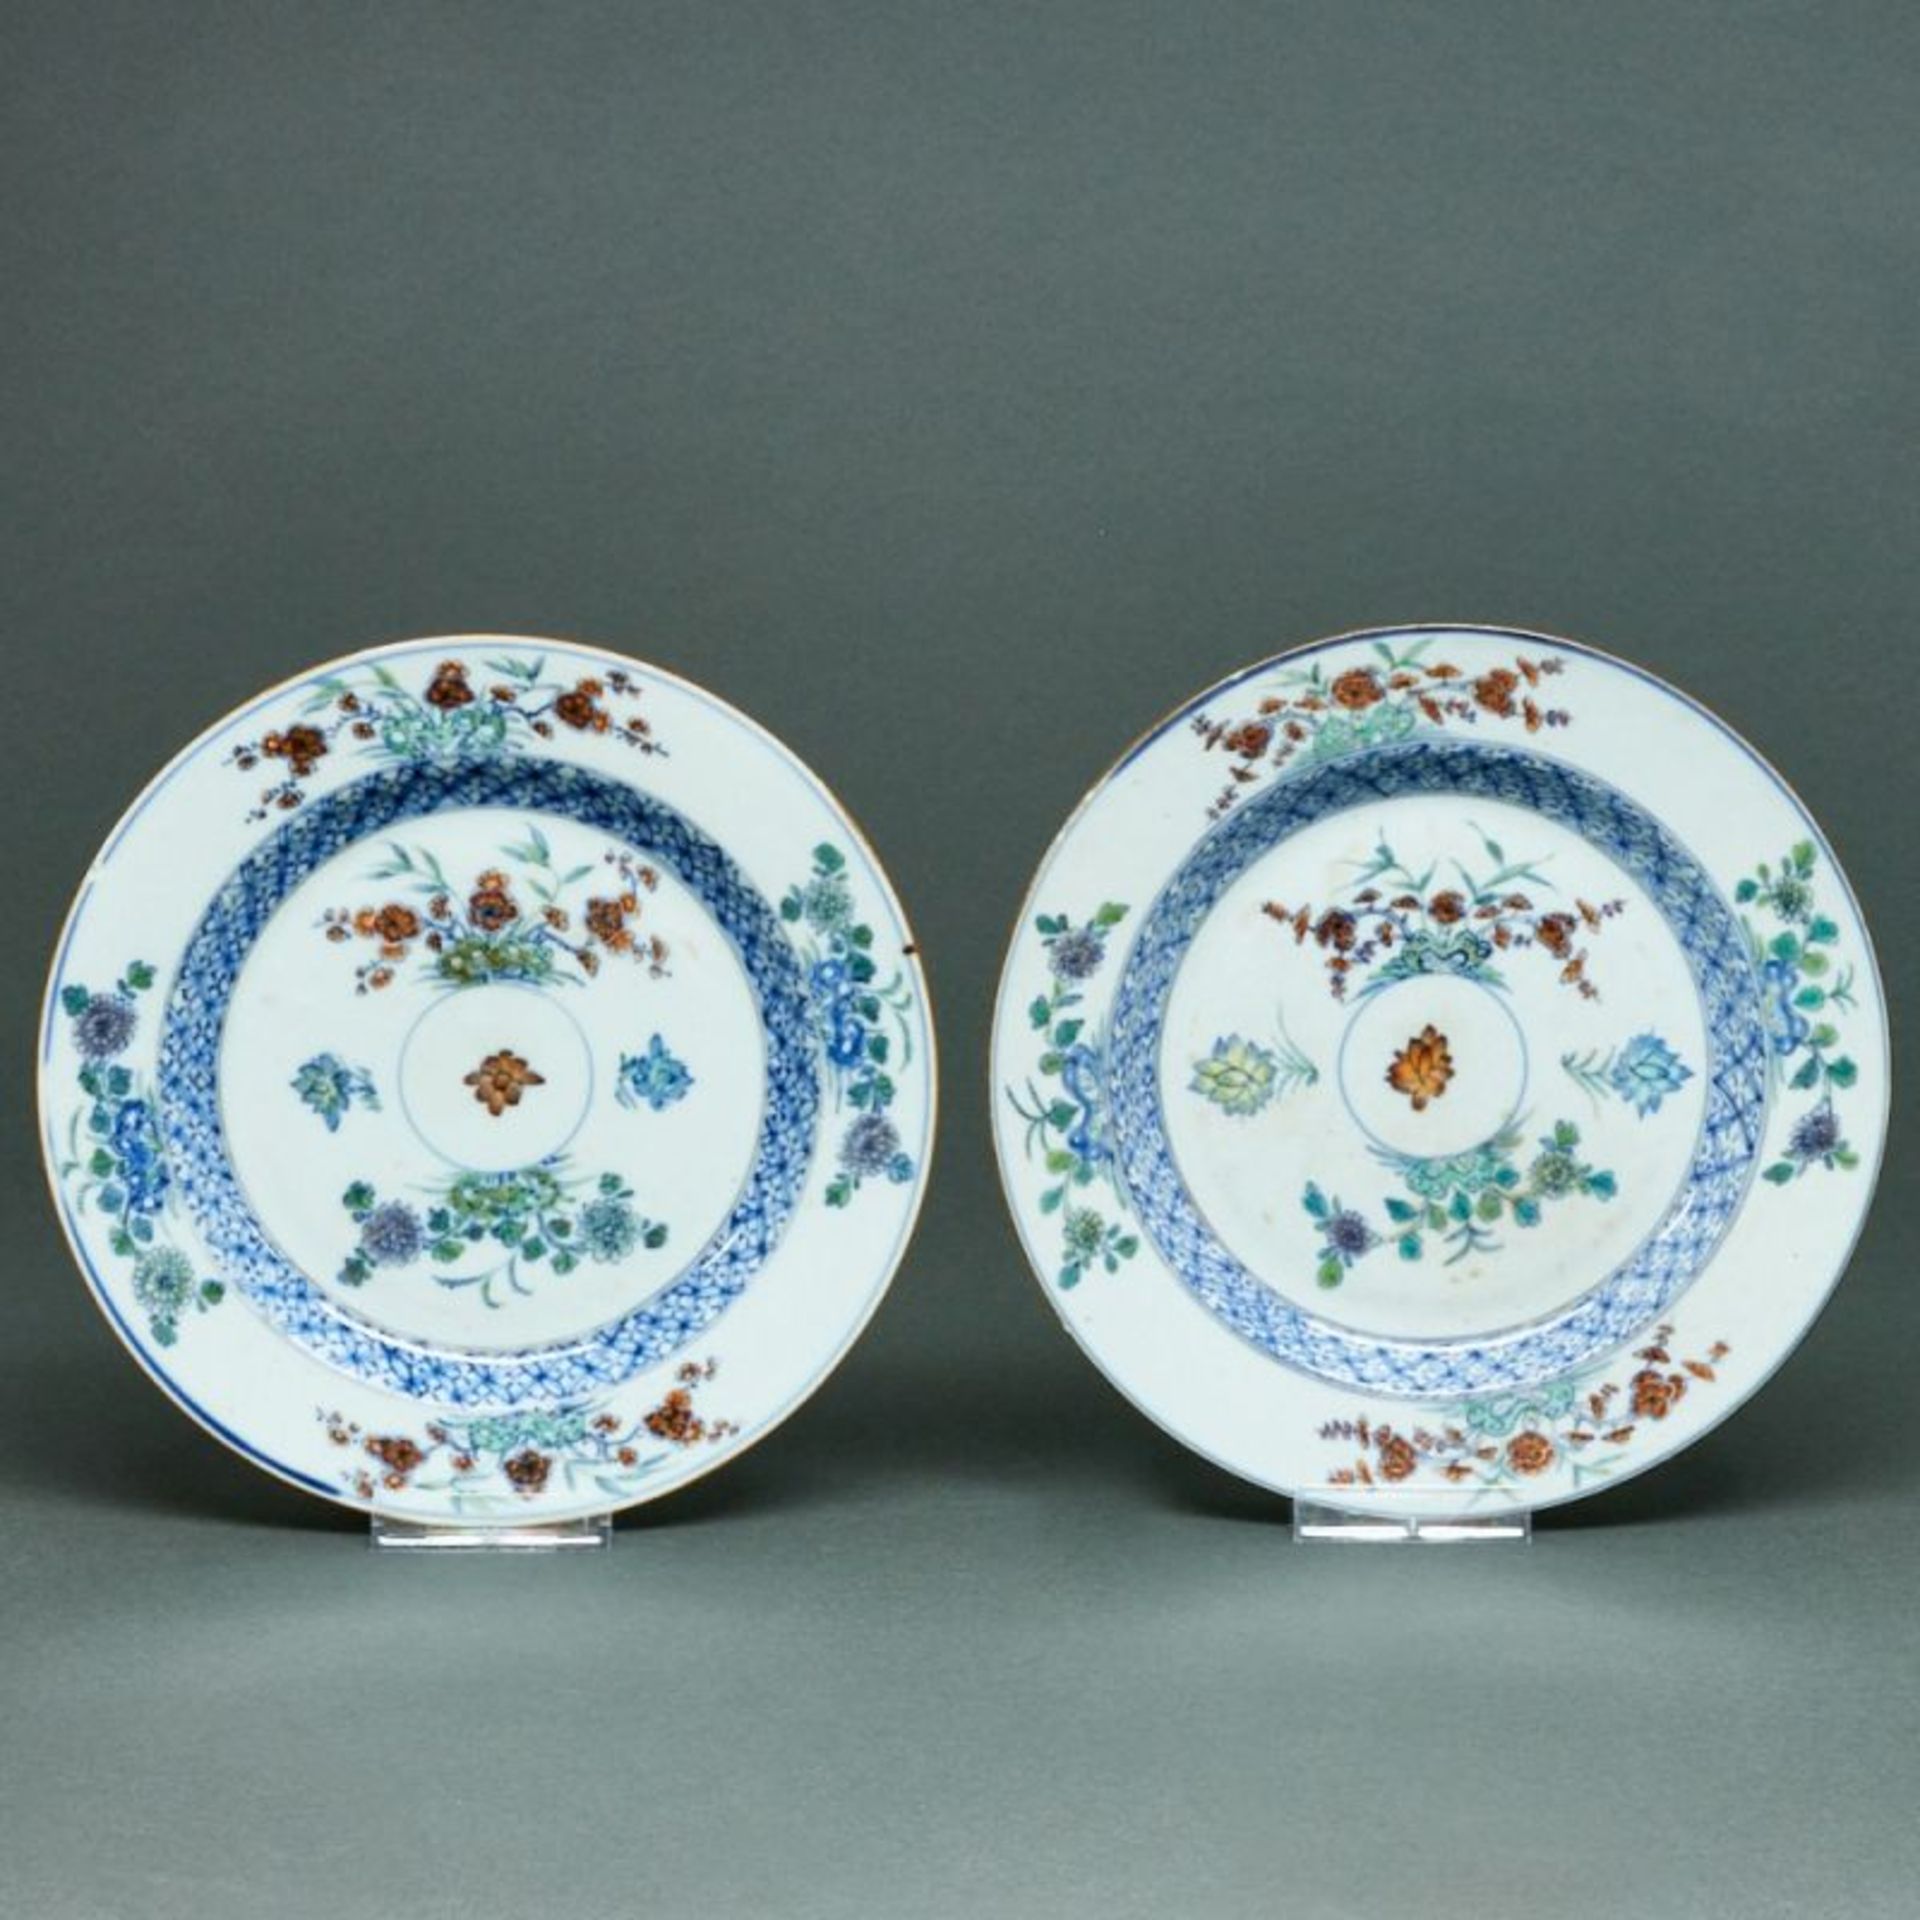 Zwei Doucai Teller, China, Qing-Dynastie, 18. Jahrhundert